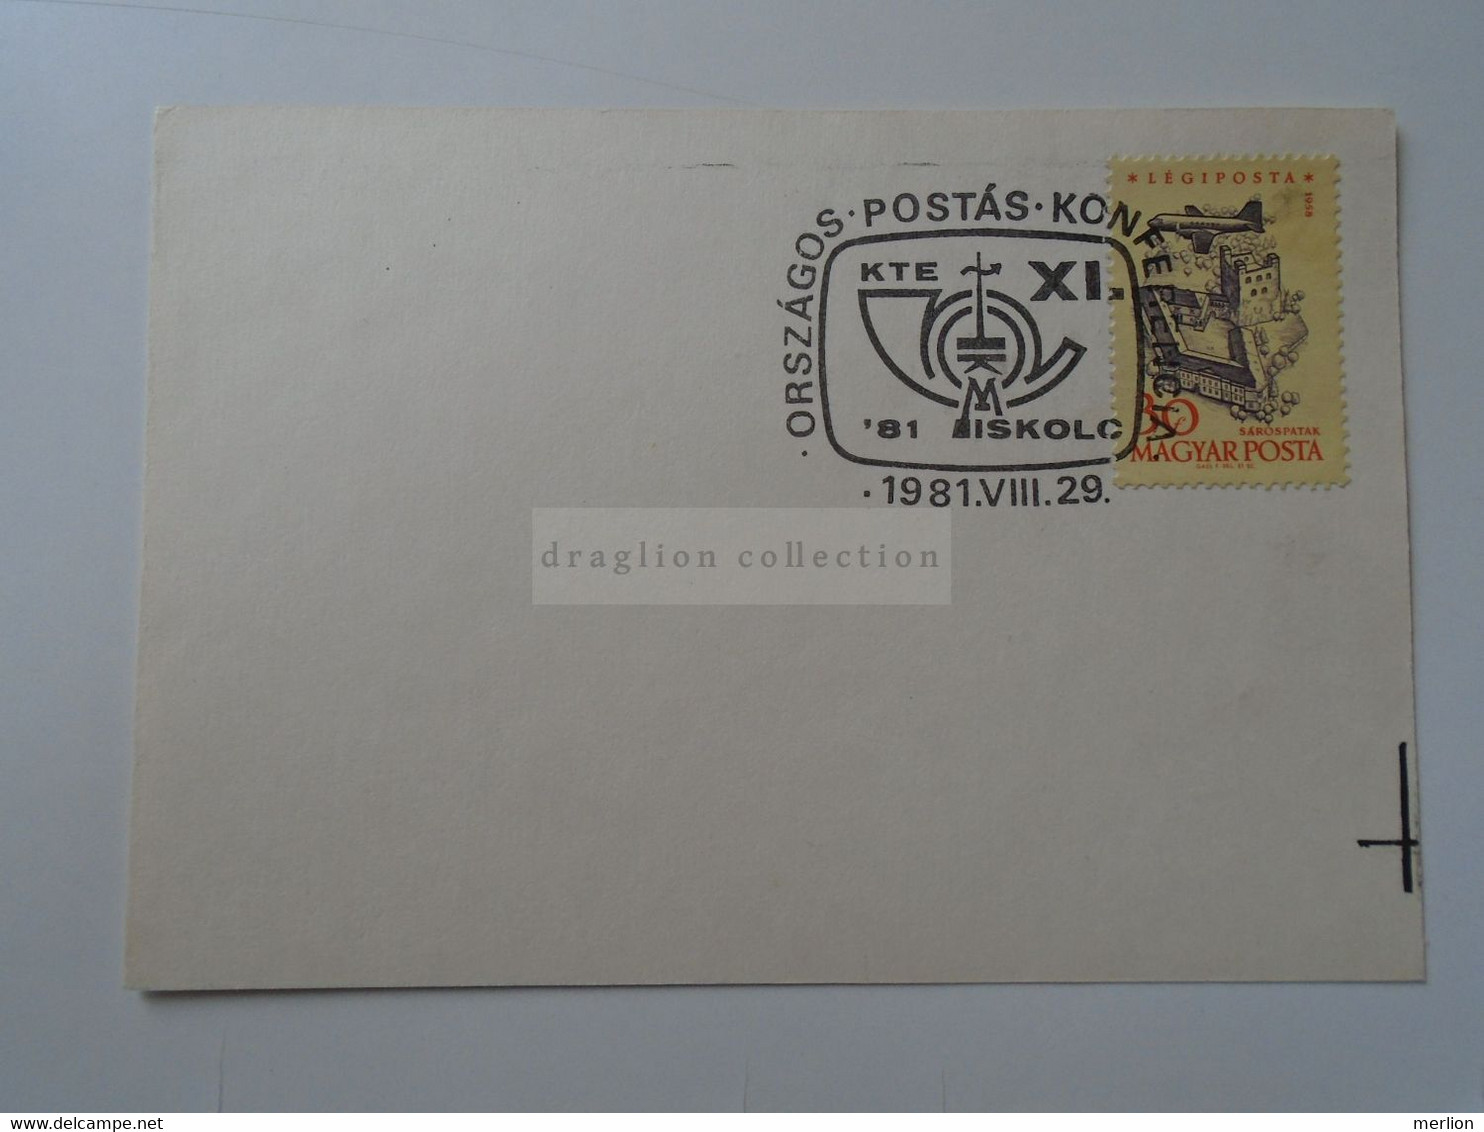 D187083    HUNGARY  Postmark     MAGYAR POSTA   - Hungarian Post - Országos Postás Konferencia  1981 Miskolc - Poststempel (Marcophilie)